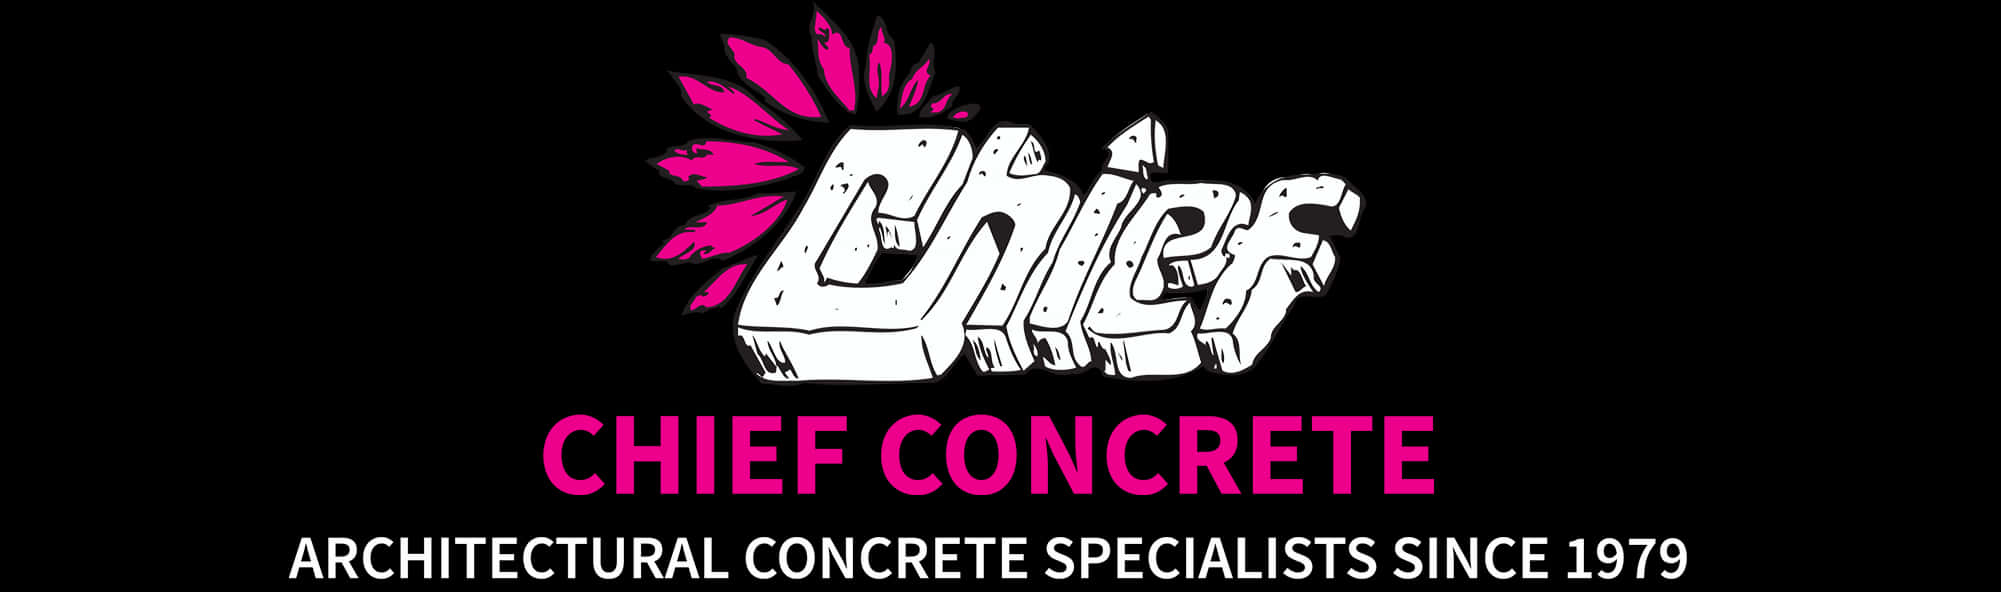 Chief Concrete Company Logo